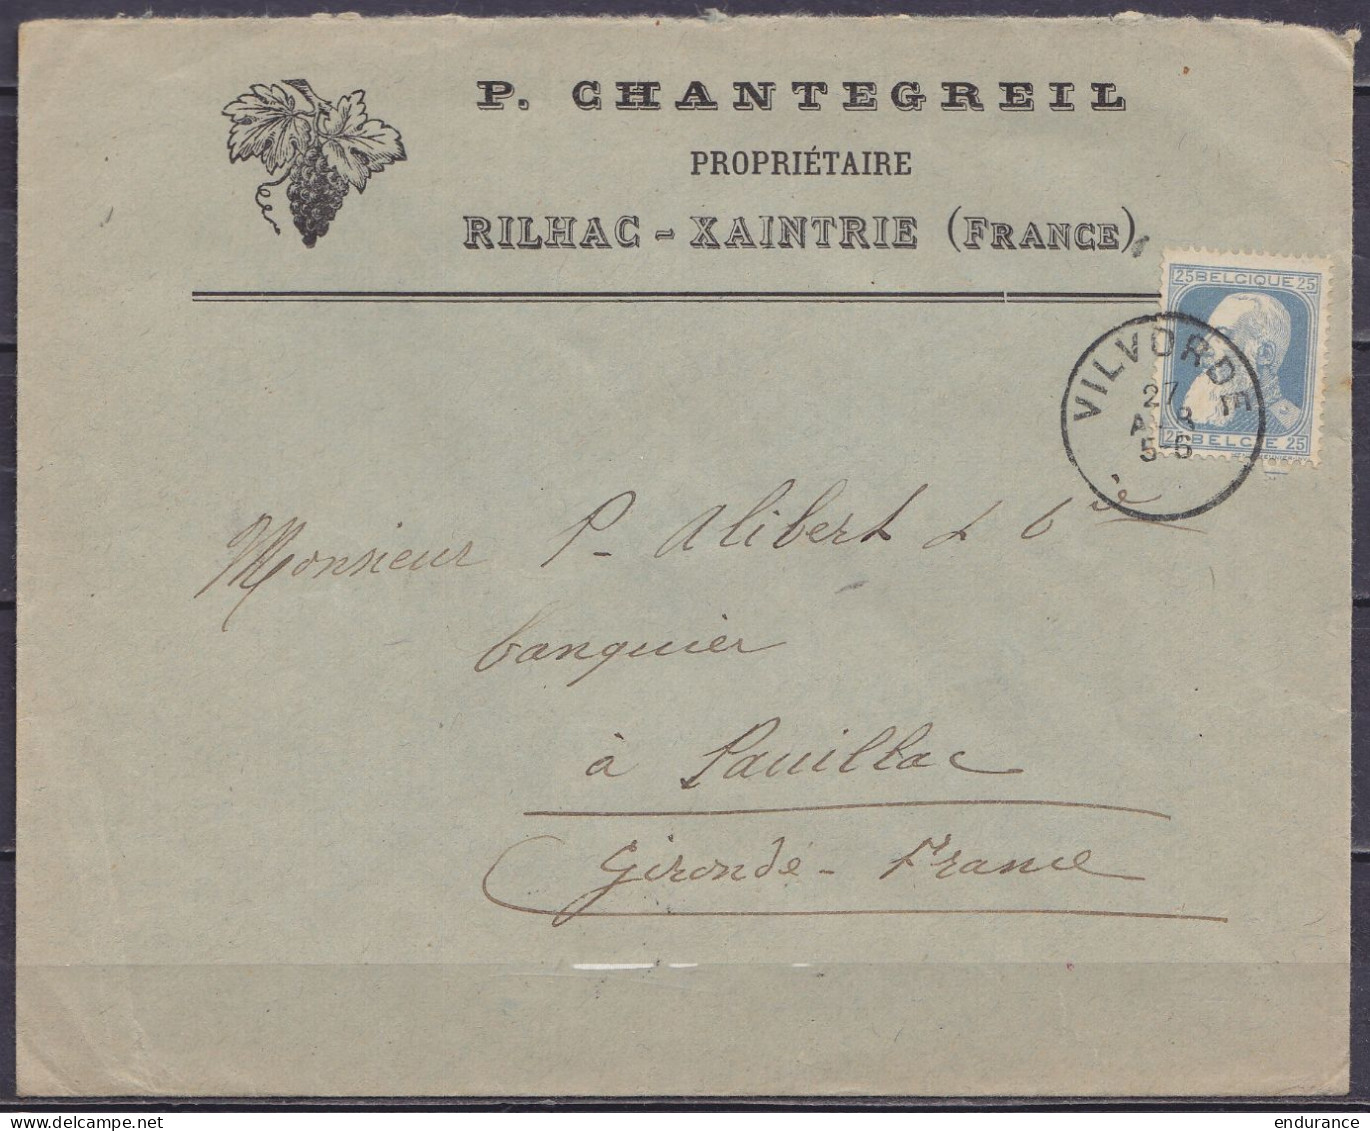 L. Entête Viticulteur "Chantegreil Rilhac-Xaintrie" Affr. N°76 Càd VILVOORDE /27 AVR 1908 Pour PAUILLAC Gironde (thème V - 1905 Thick Beard